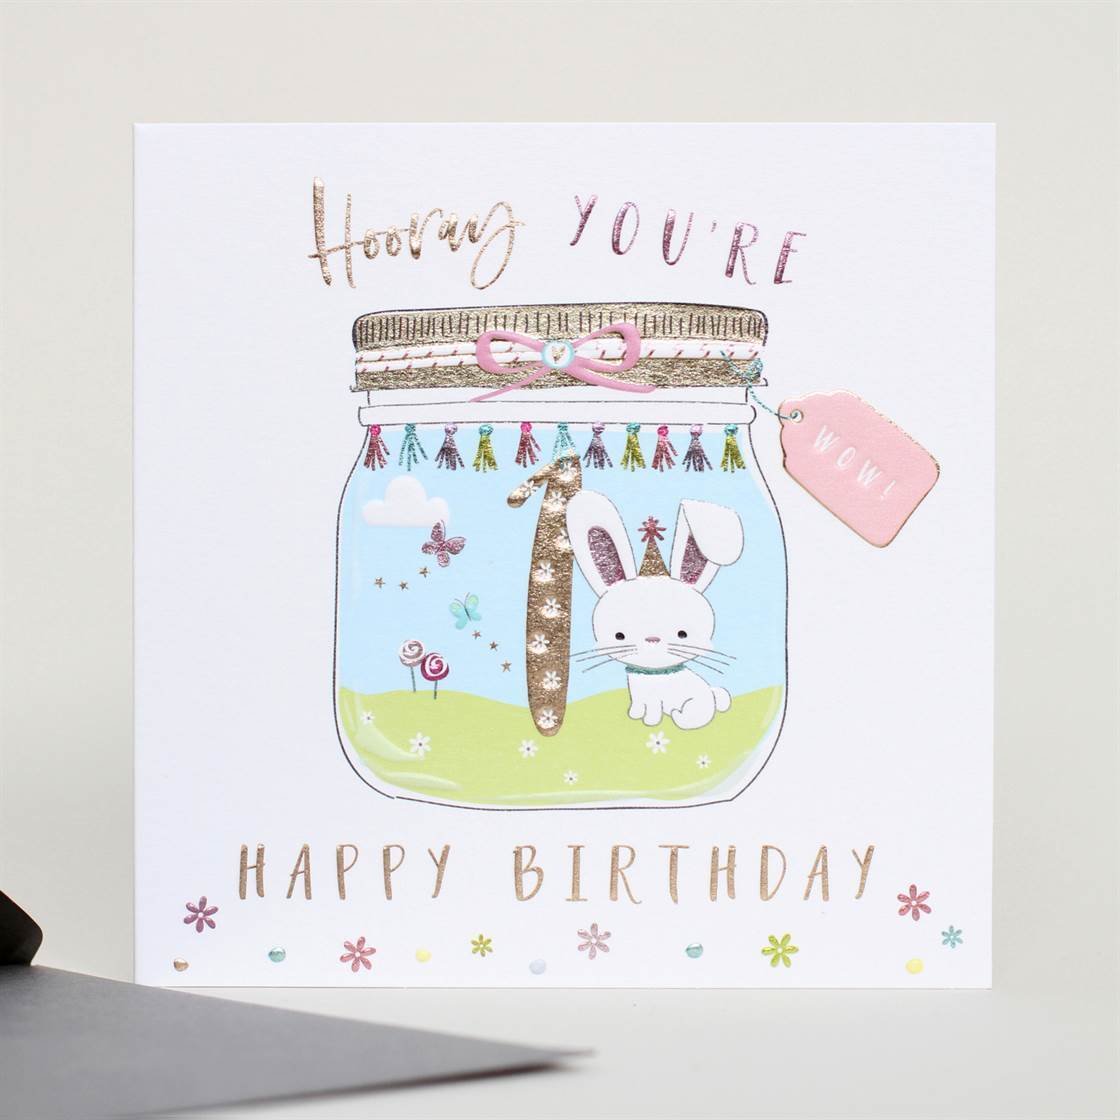 Hooray You’re 1 Birthday Card | Girl